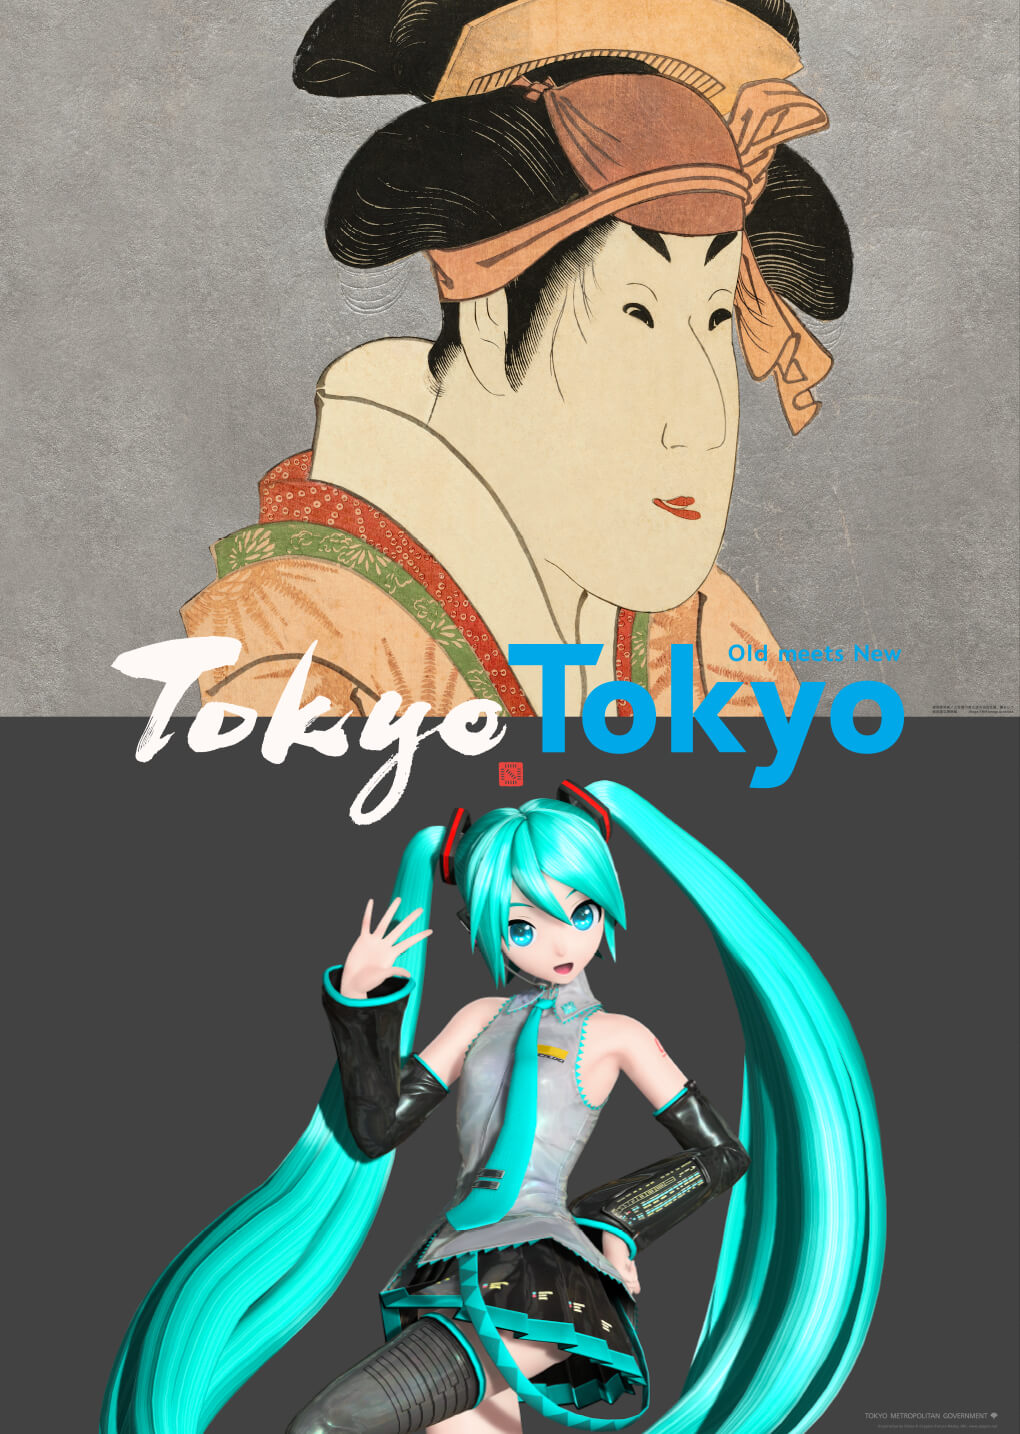 TokyoTokyo Old meets New Brand poster 2